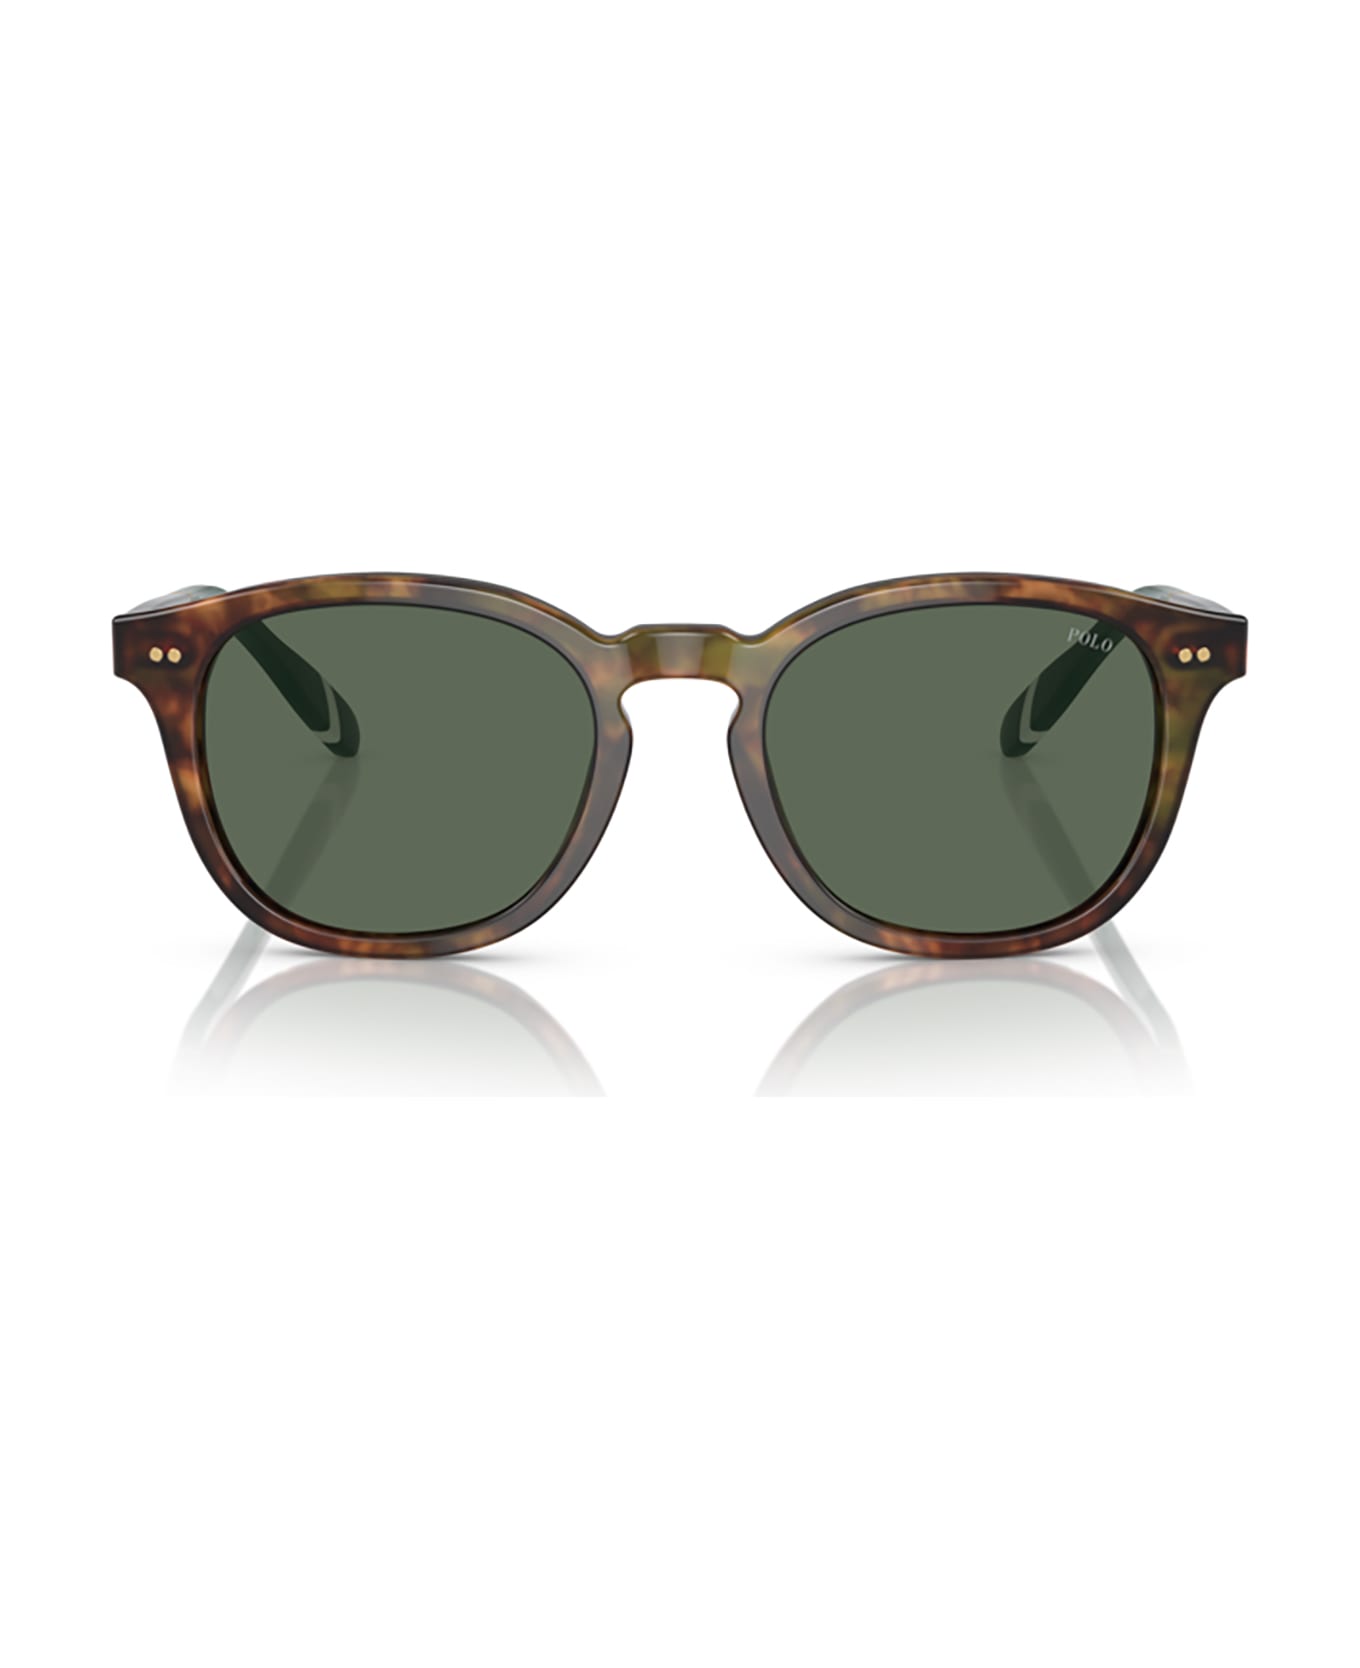 Polo Ralph Lauren Ph4206 Shiny Brown Tortoise Sunglasses - Shiny brown tortoise